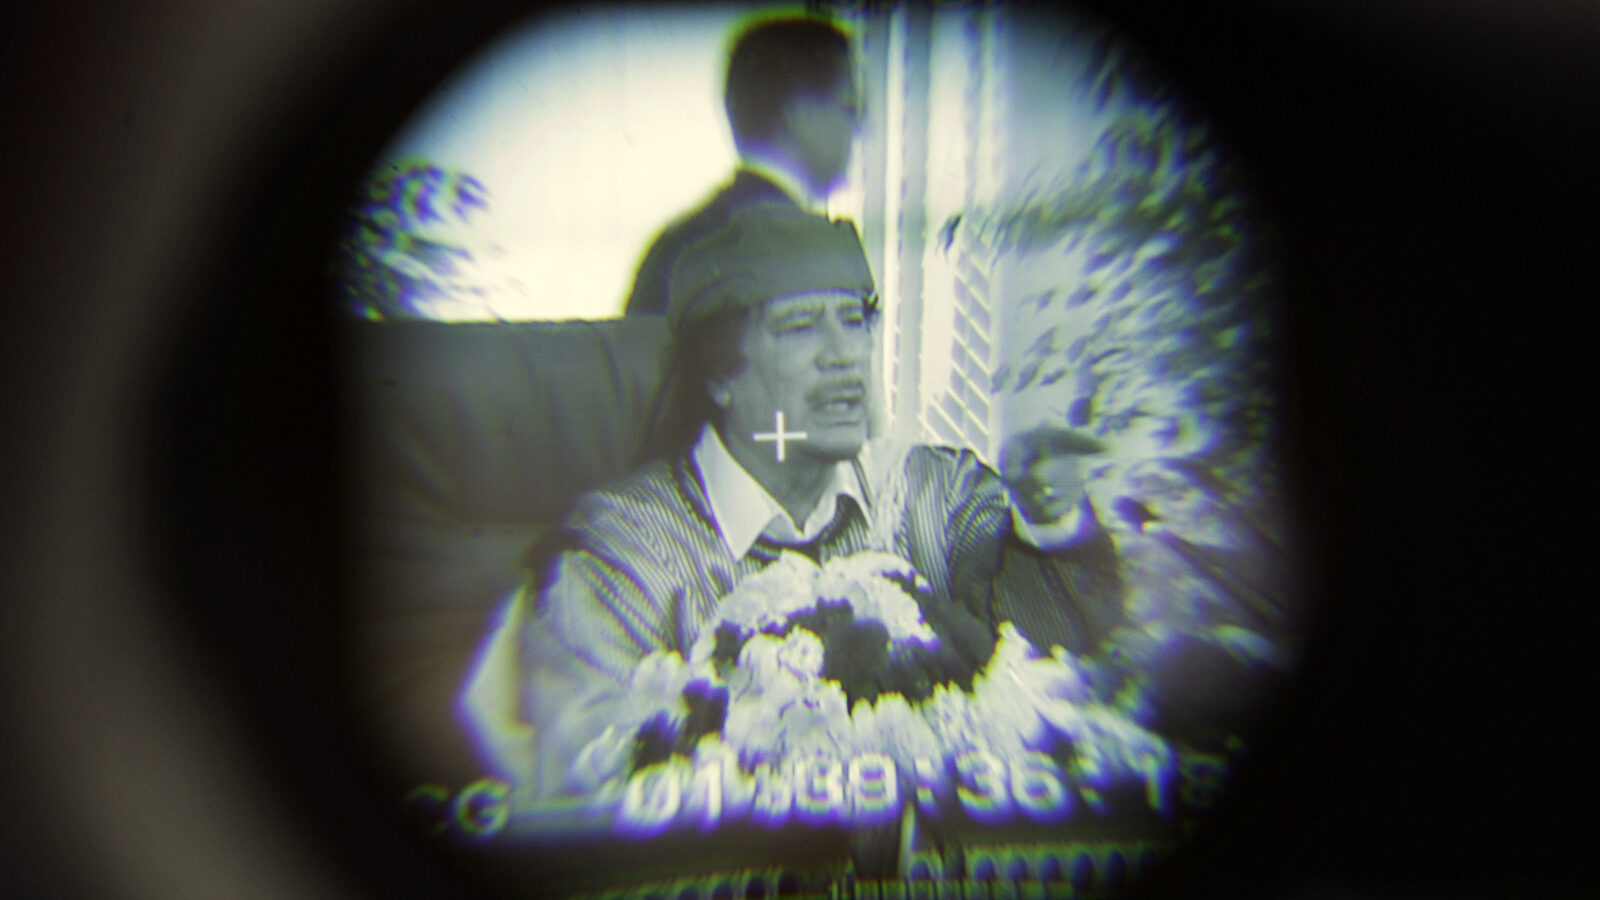 Libyan Leader Moammar Gadhafi is seen through a television camera viewfinder as he speaks in Tripoli, Libya.